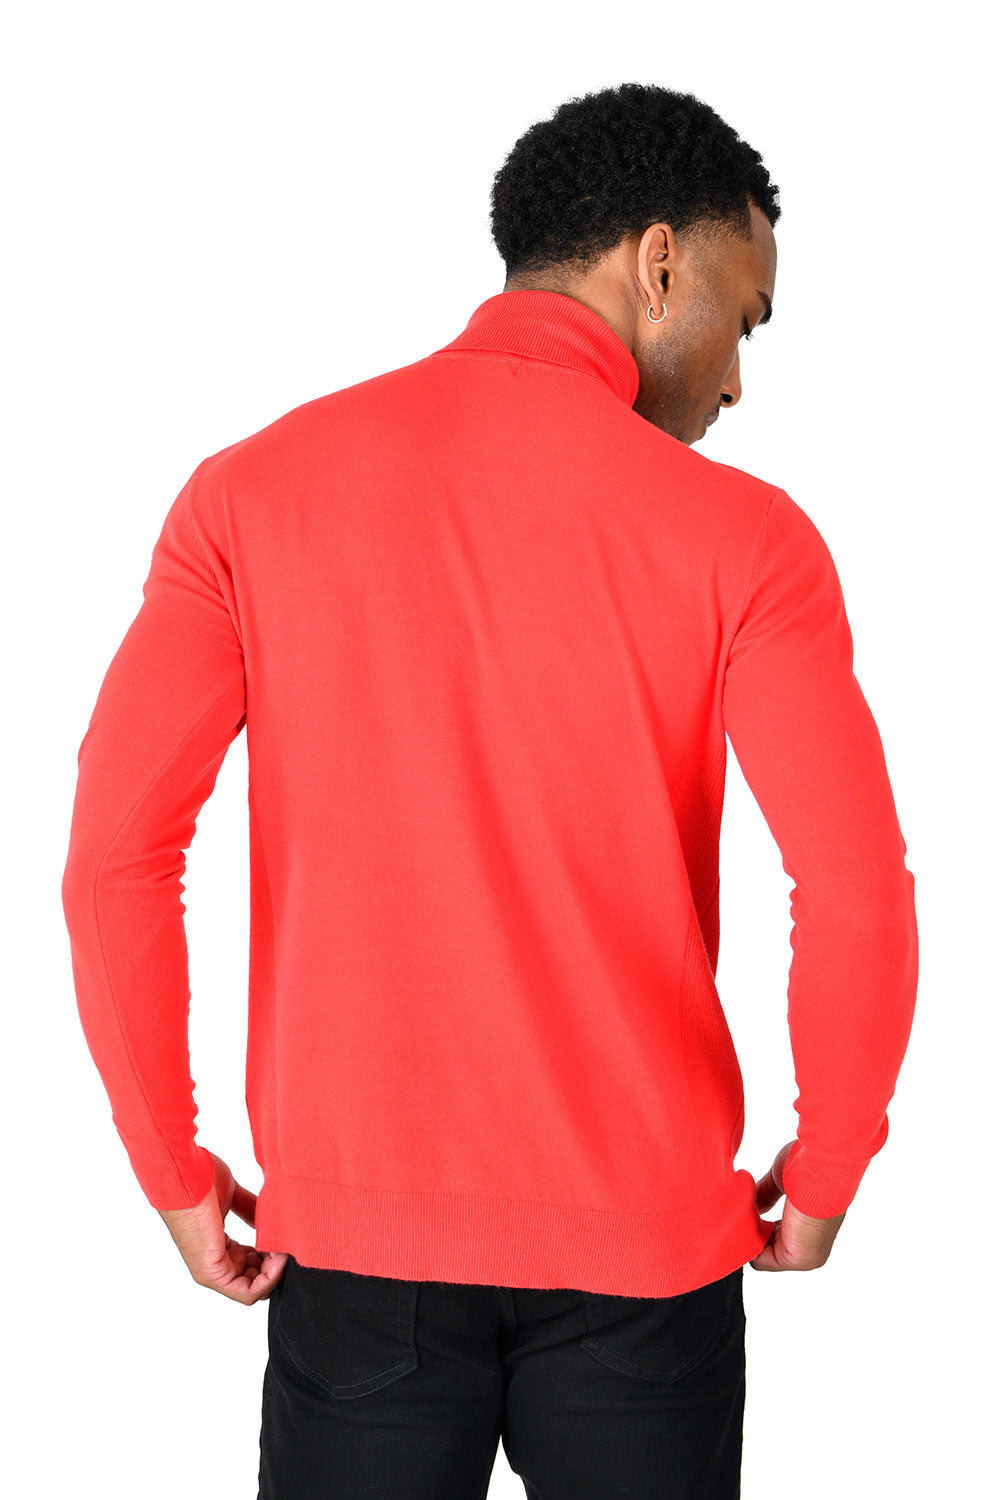 Men's Turtleneck Ribbed Solid Color Basic Sweater LS2100 Red